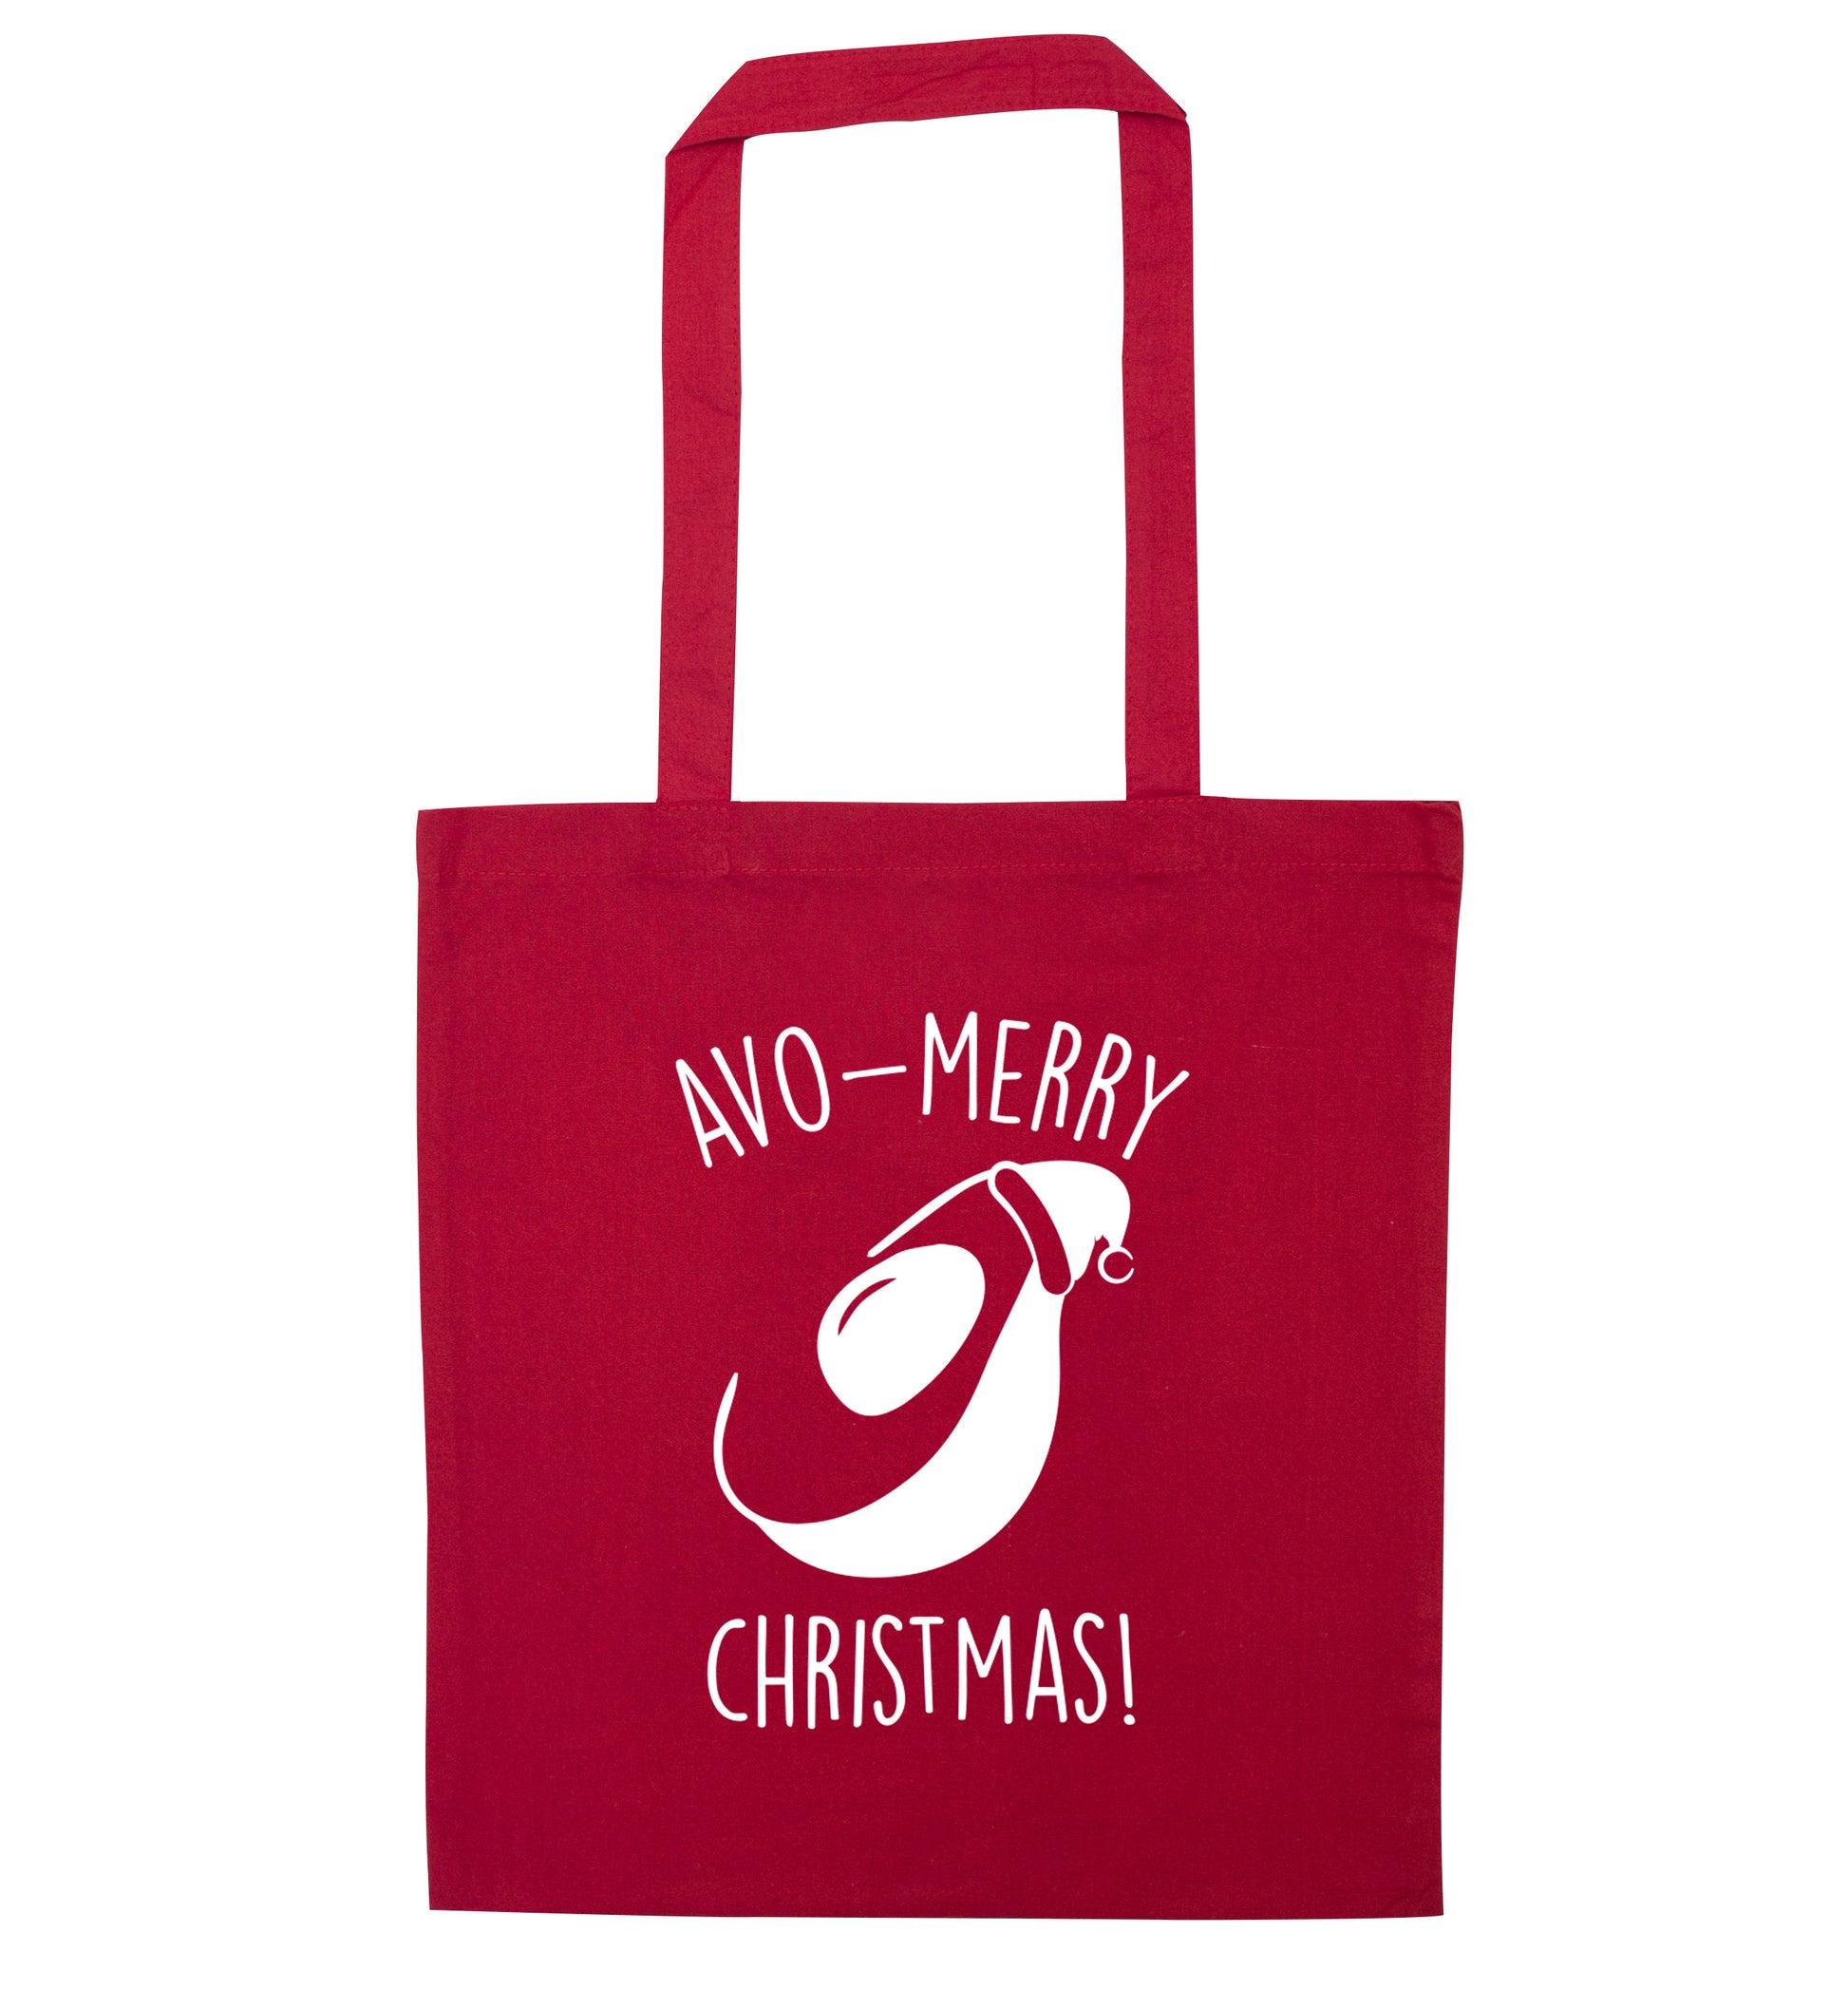 Avo-Merry Christmas red tote bag